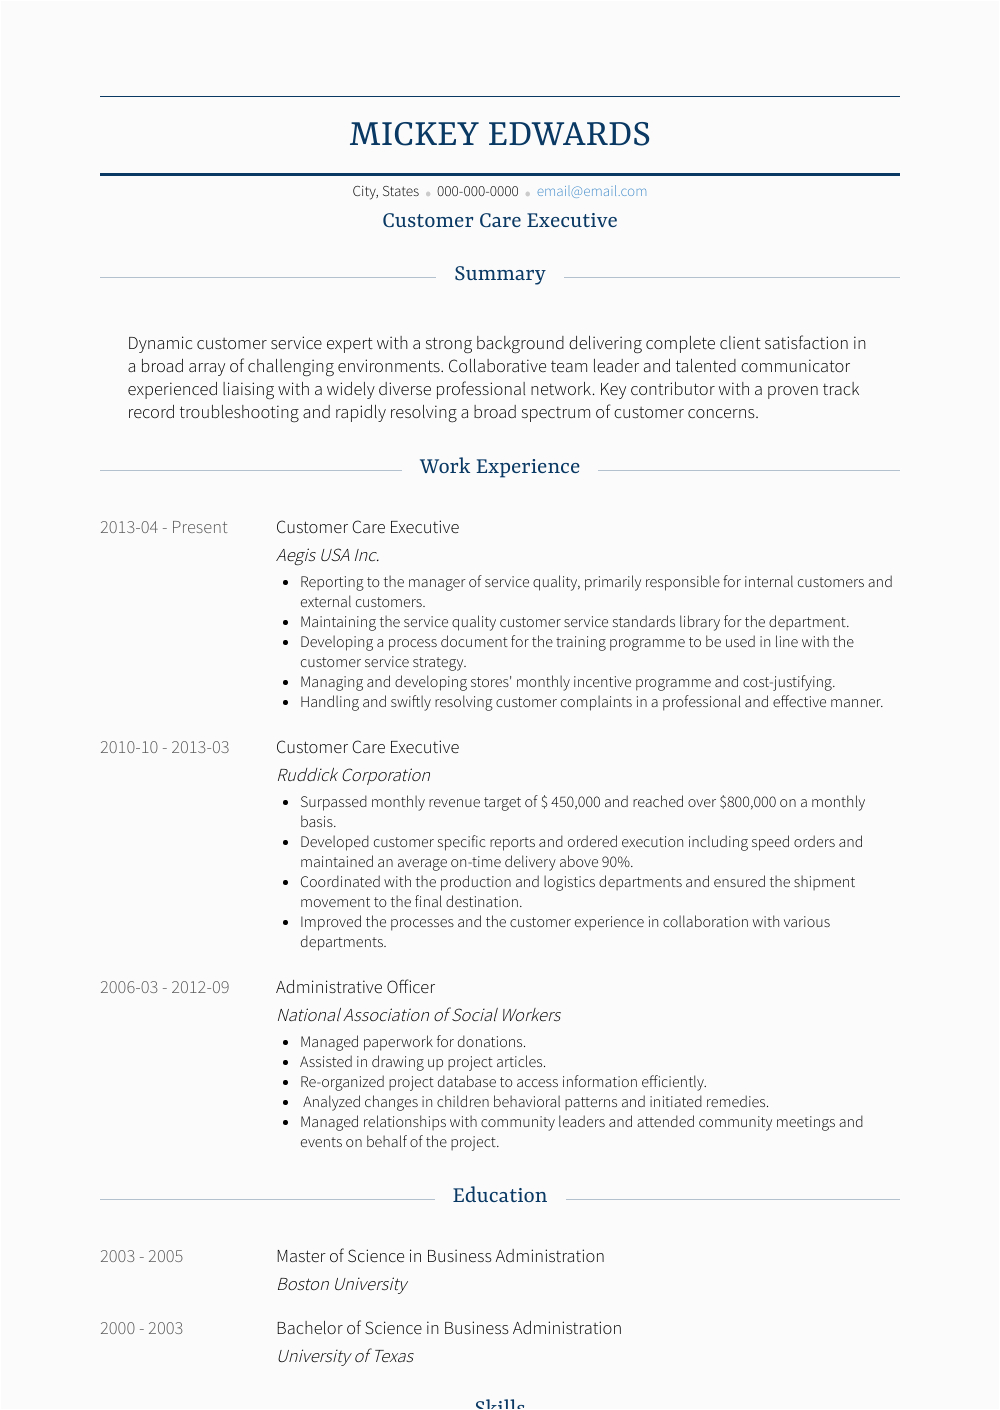 Sample Resume Of Customer Care Executive Customer Care Executive Resume Samples and Templates